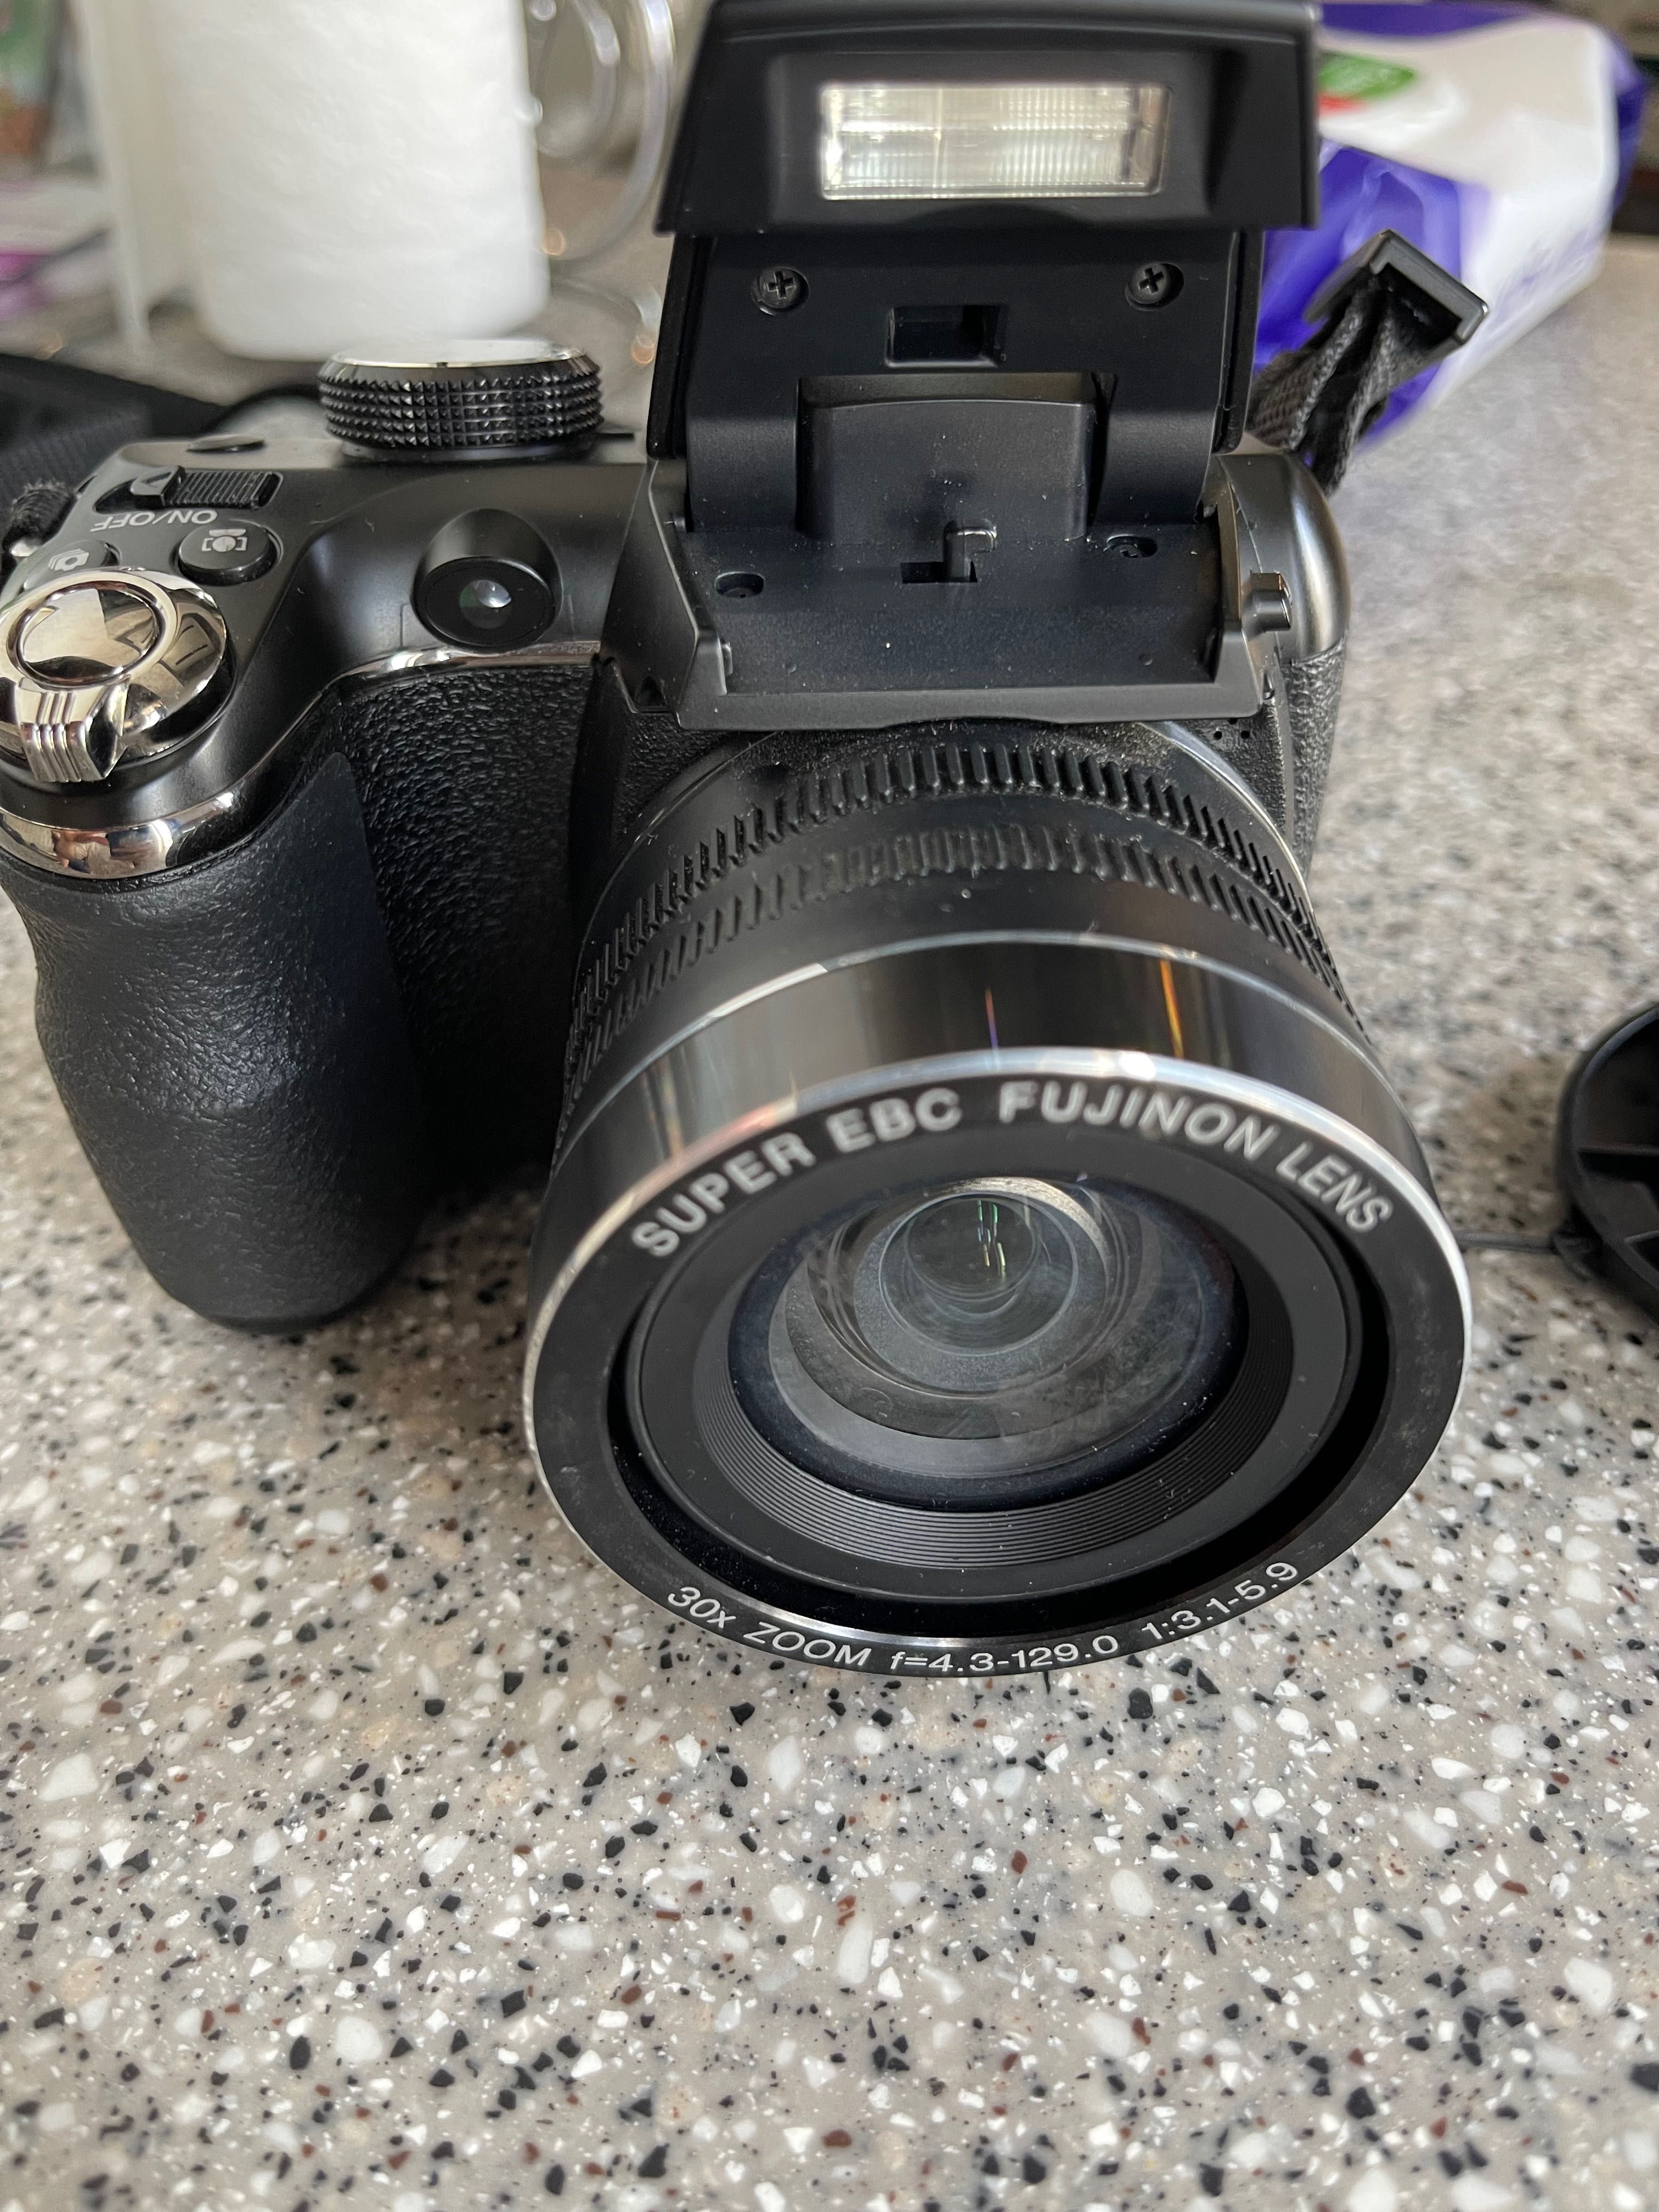 Fujifilm фотоаппарат